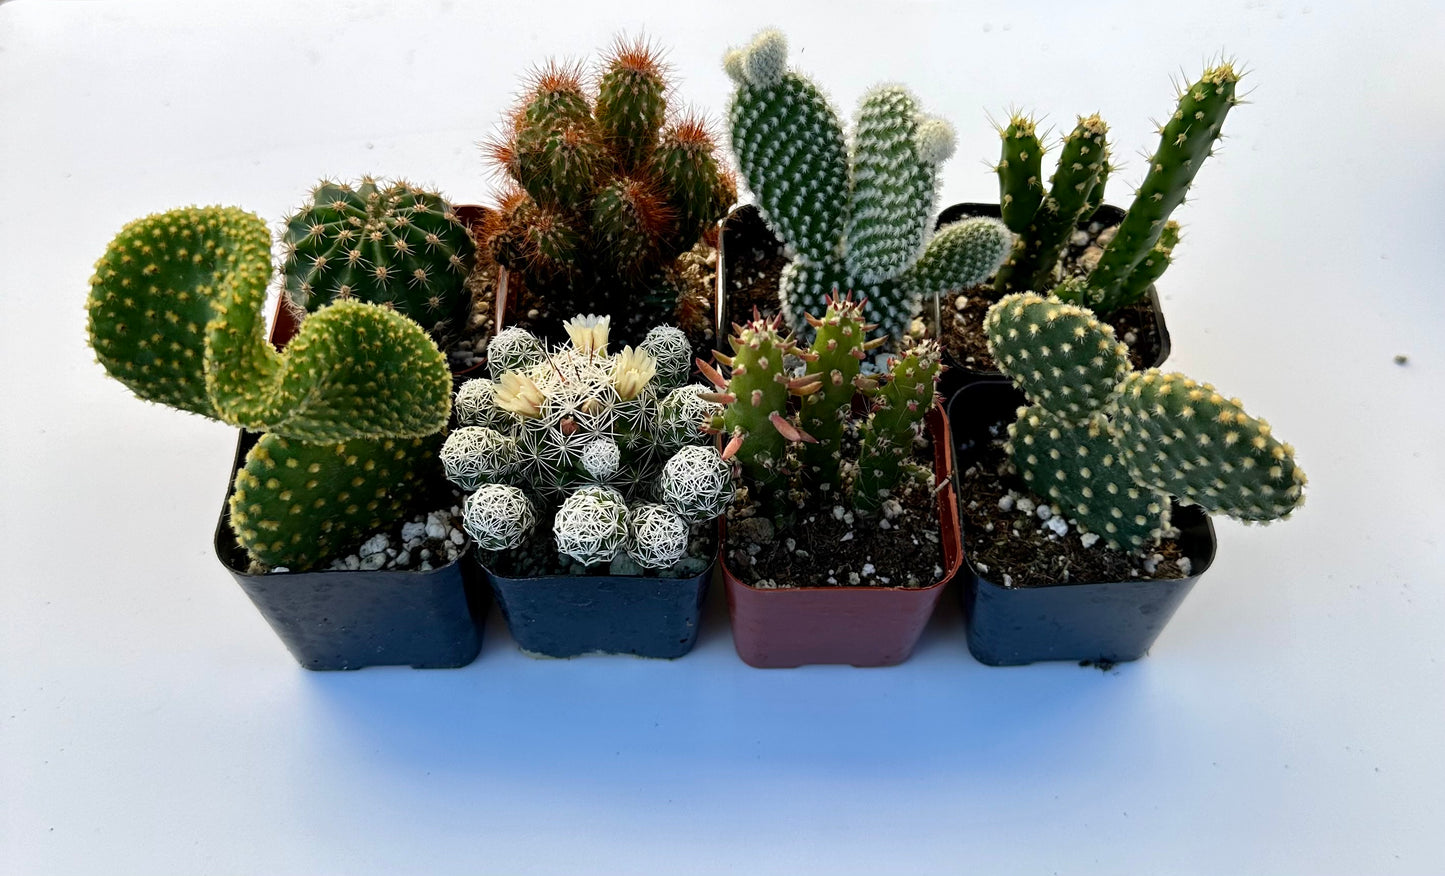 Cactus Bundle